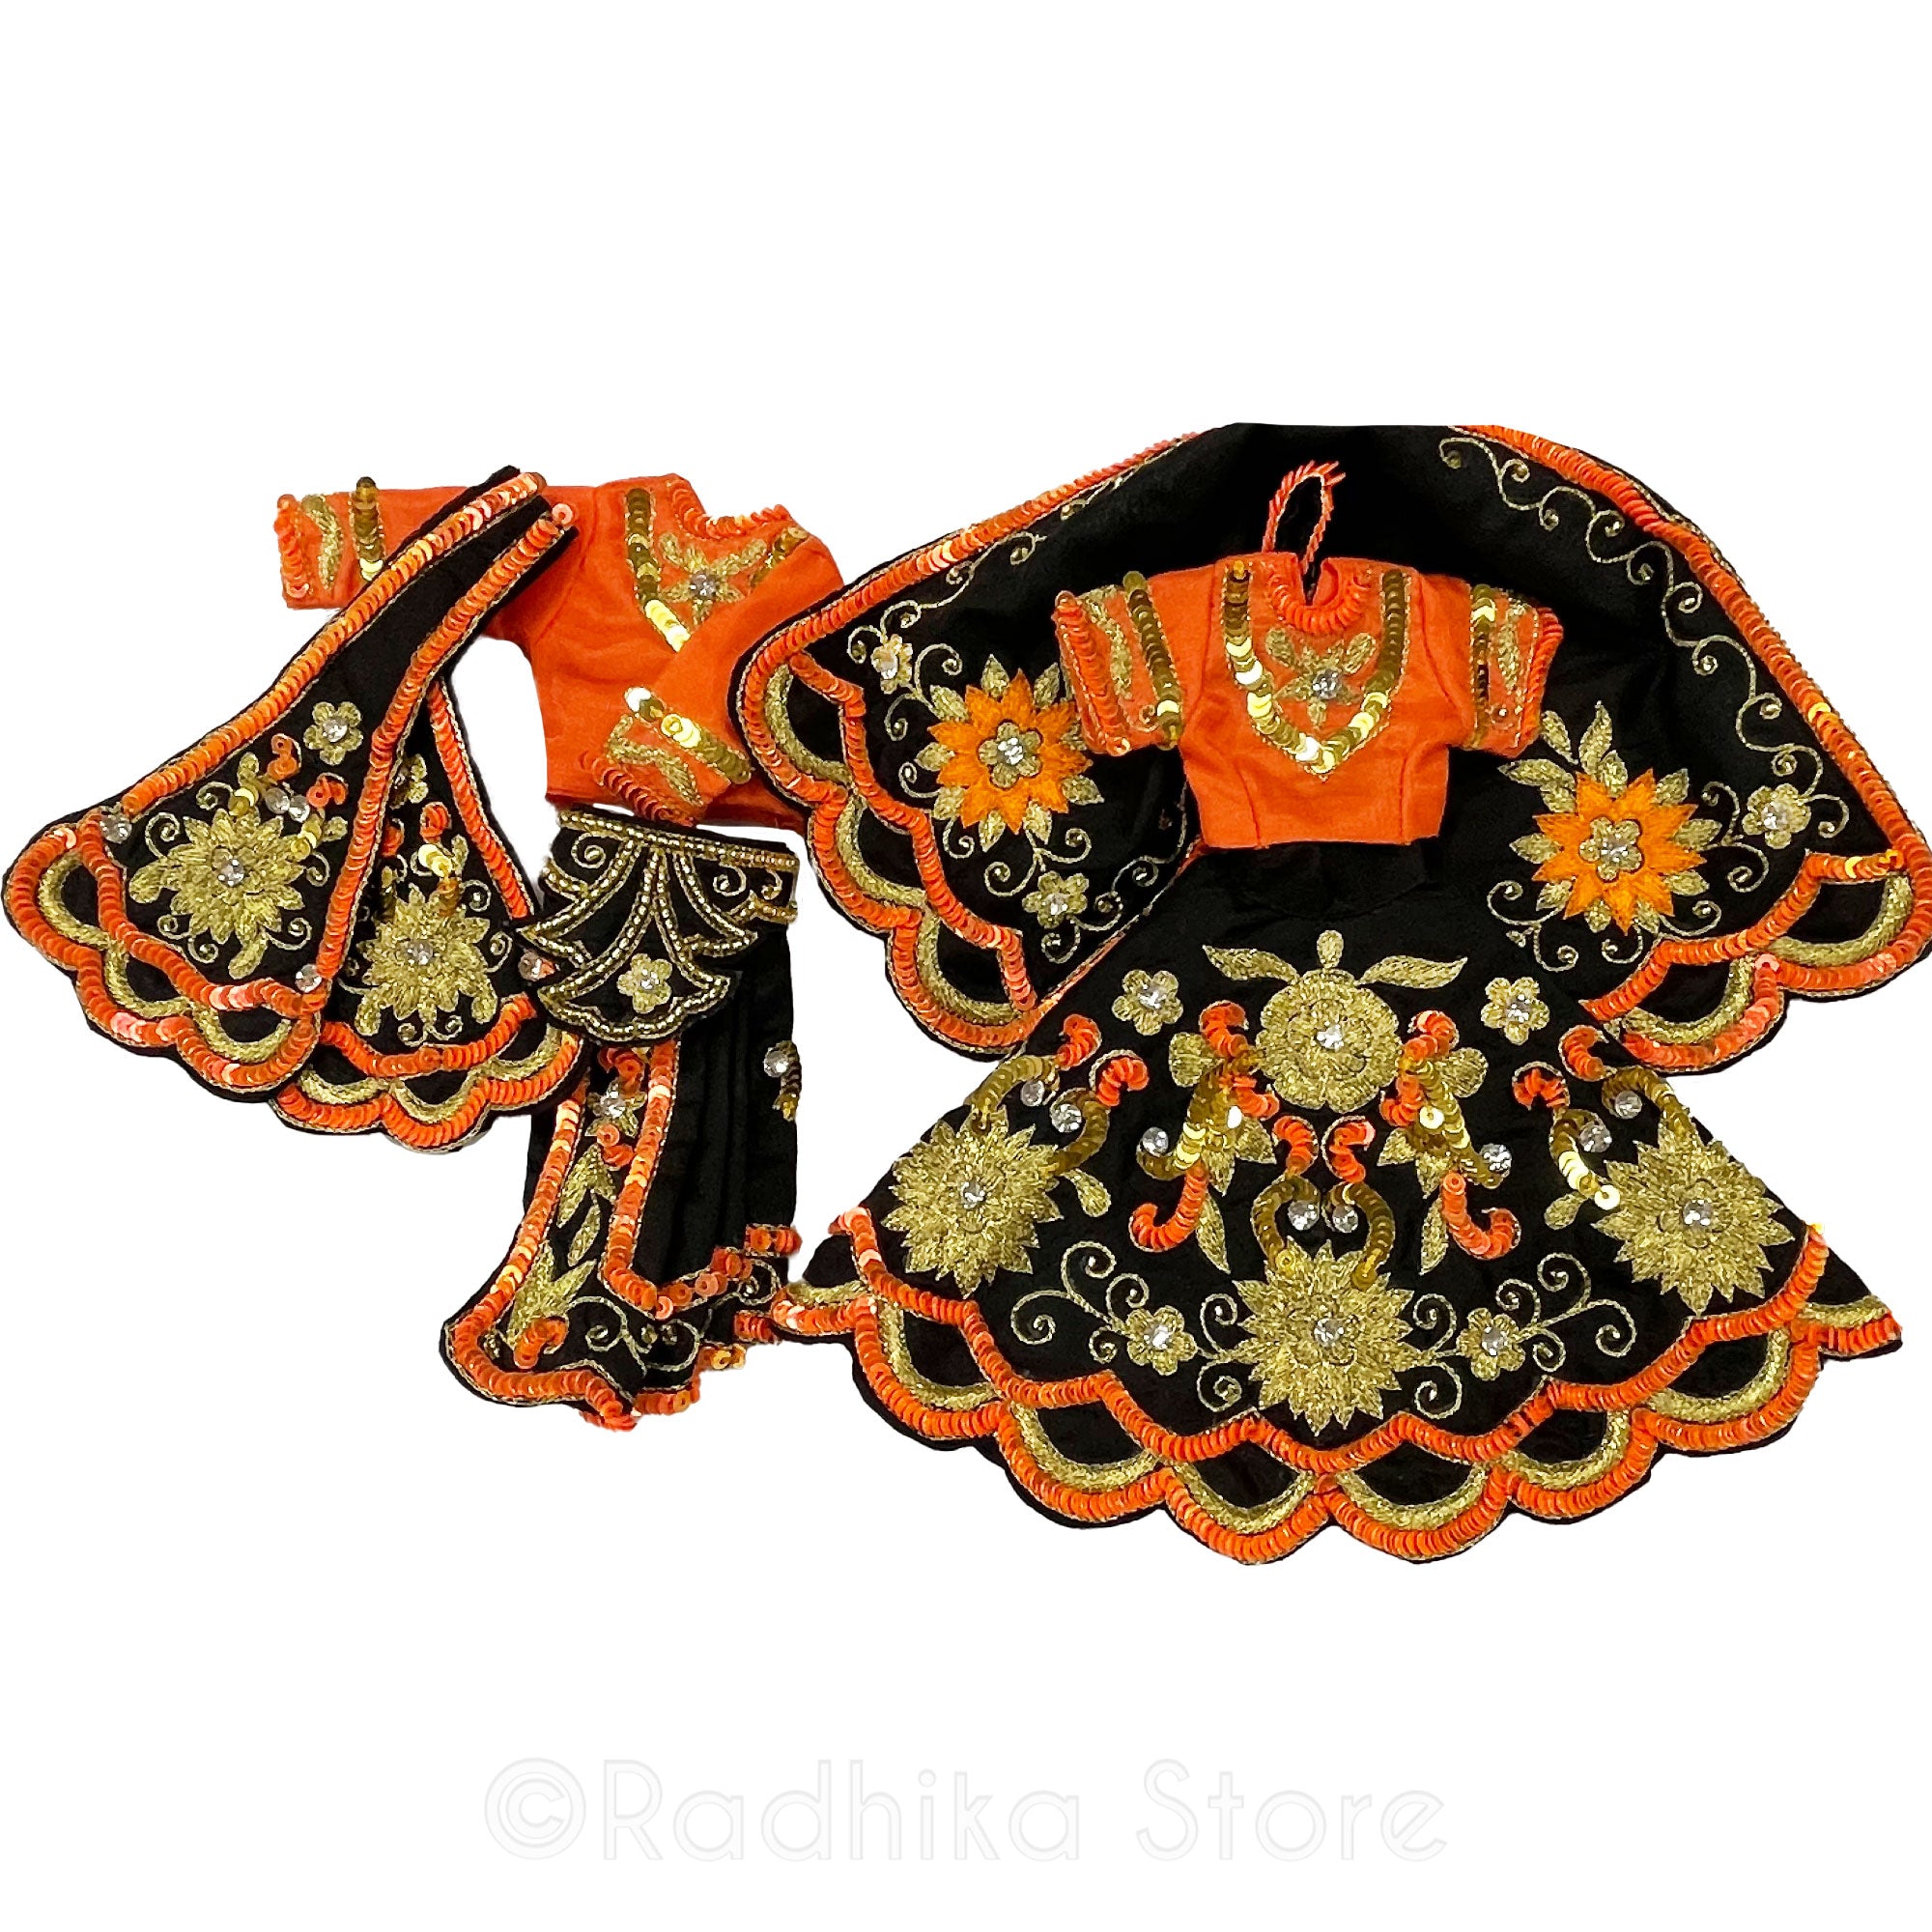 Artik Dancing Candles - All Silk - Black-Orange-Gold - Radha Krishna Deity Outfit